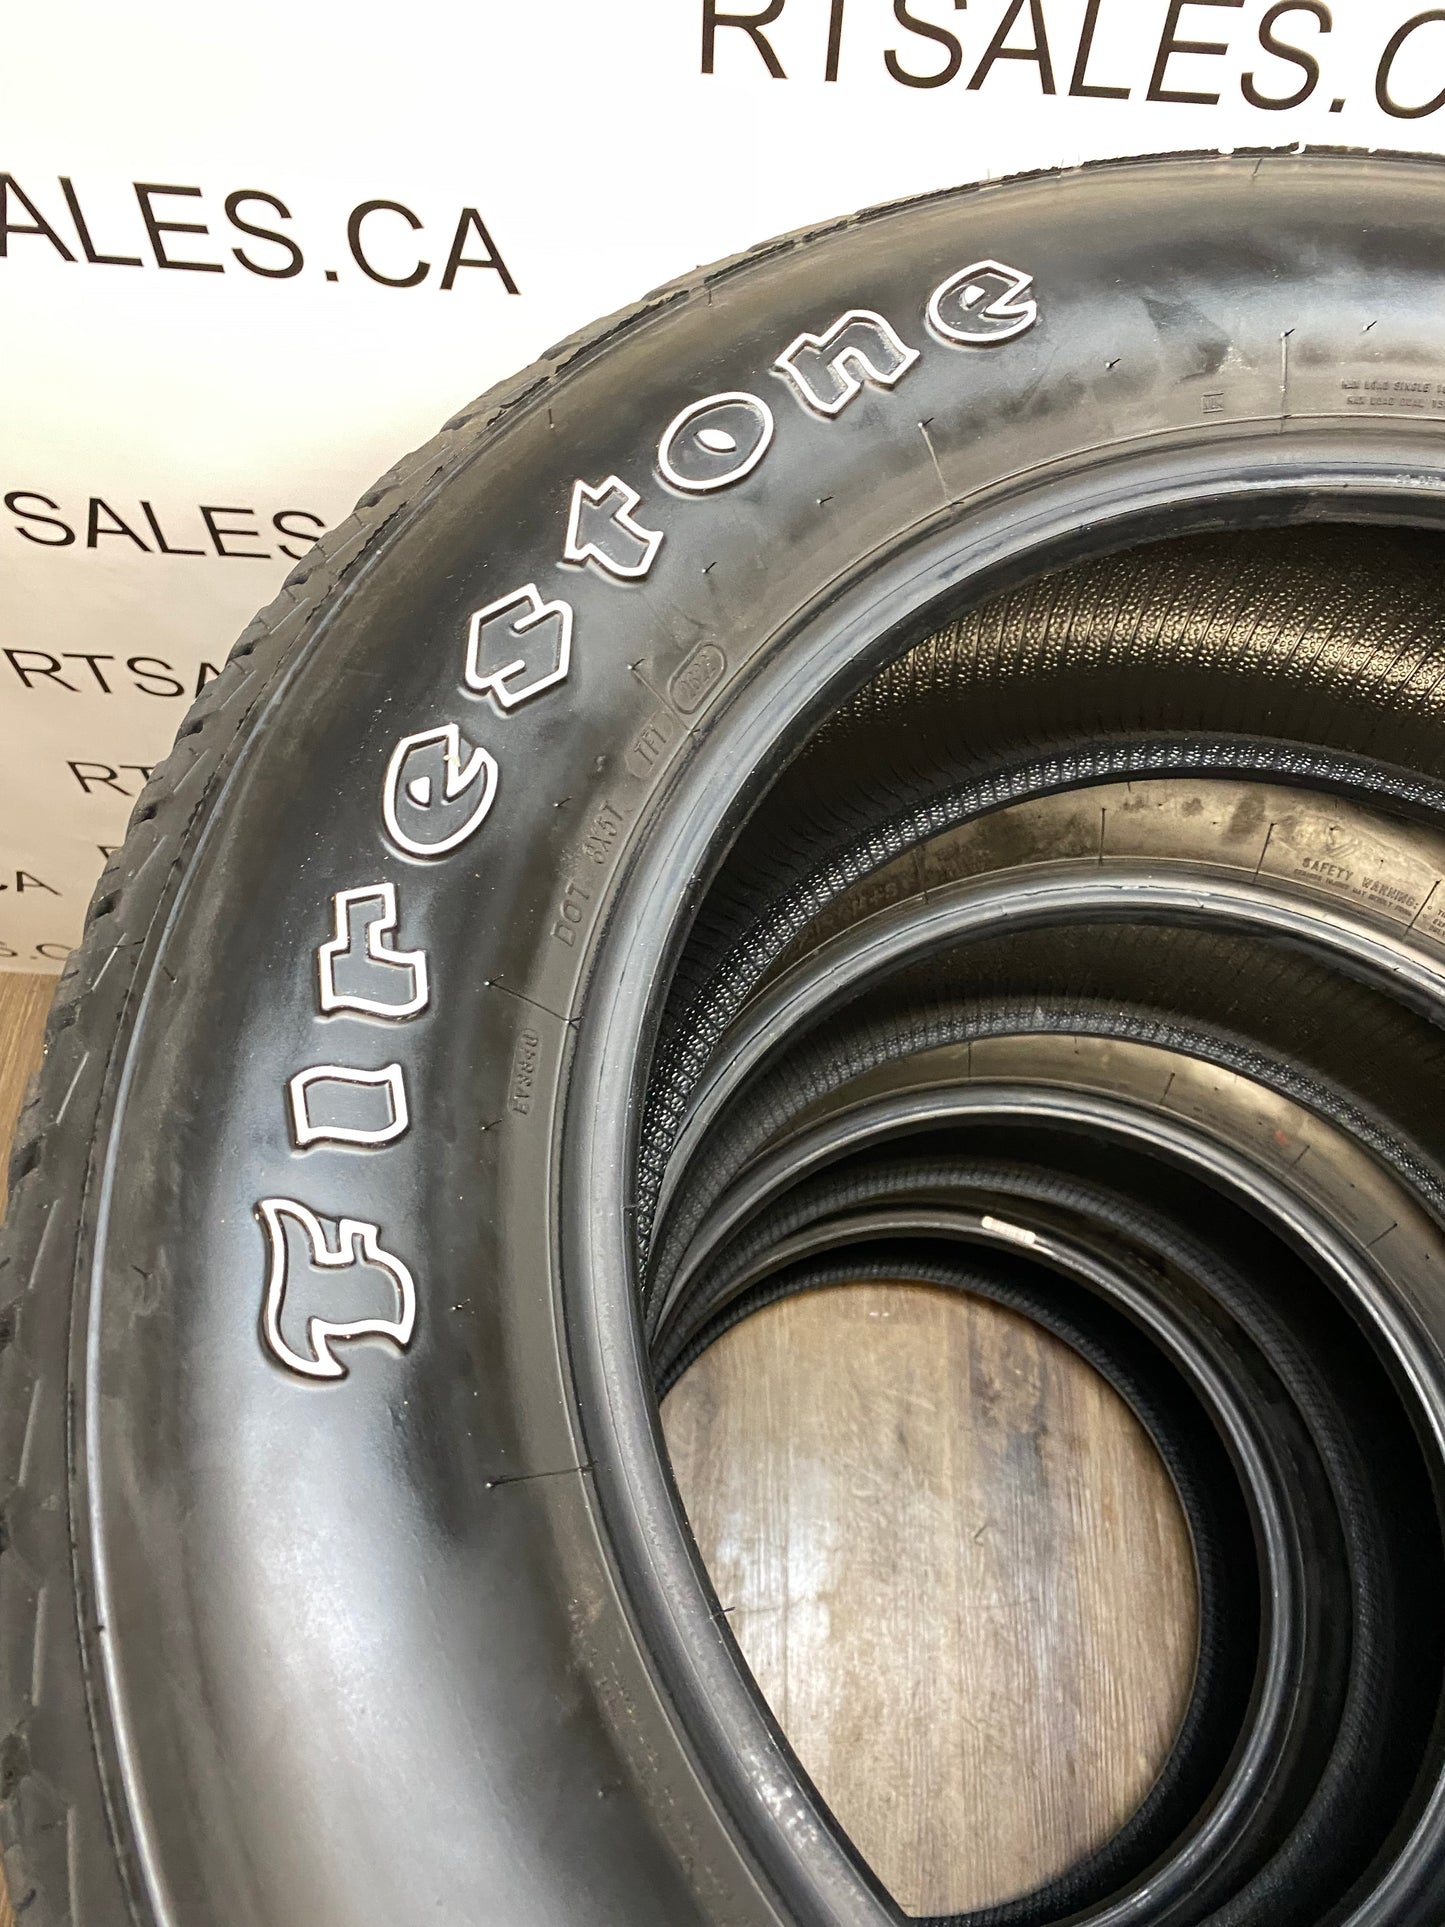 LT 285/60/20 Firestone TRANSFORCE AT E All Season Tires (Used)